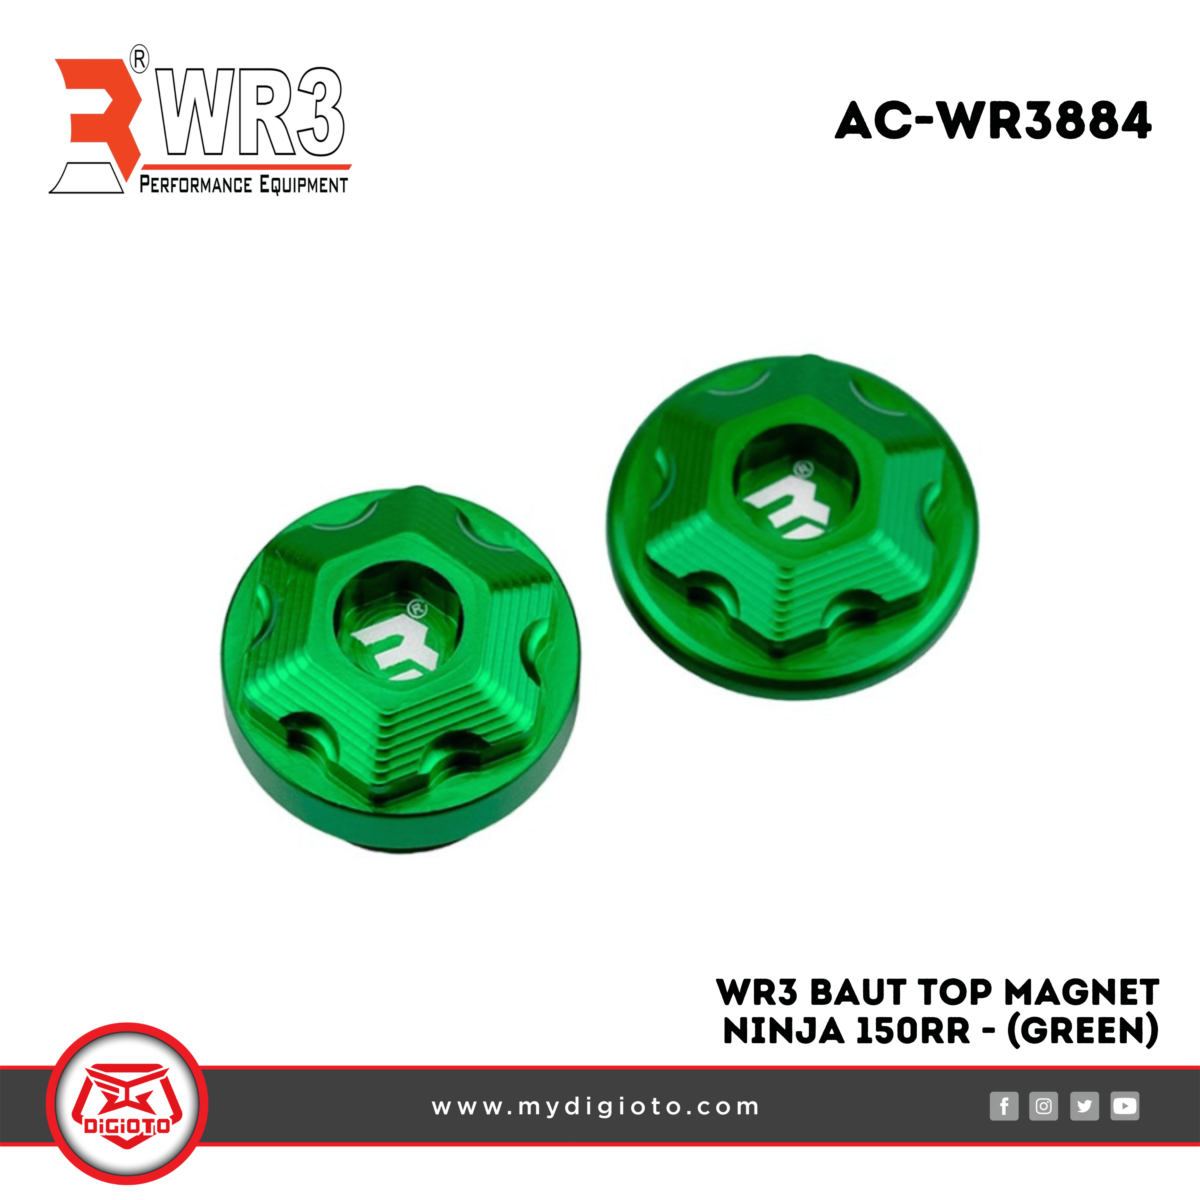 WR3 Baut Top Magnet Ninja 150RR - Green